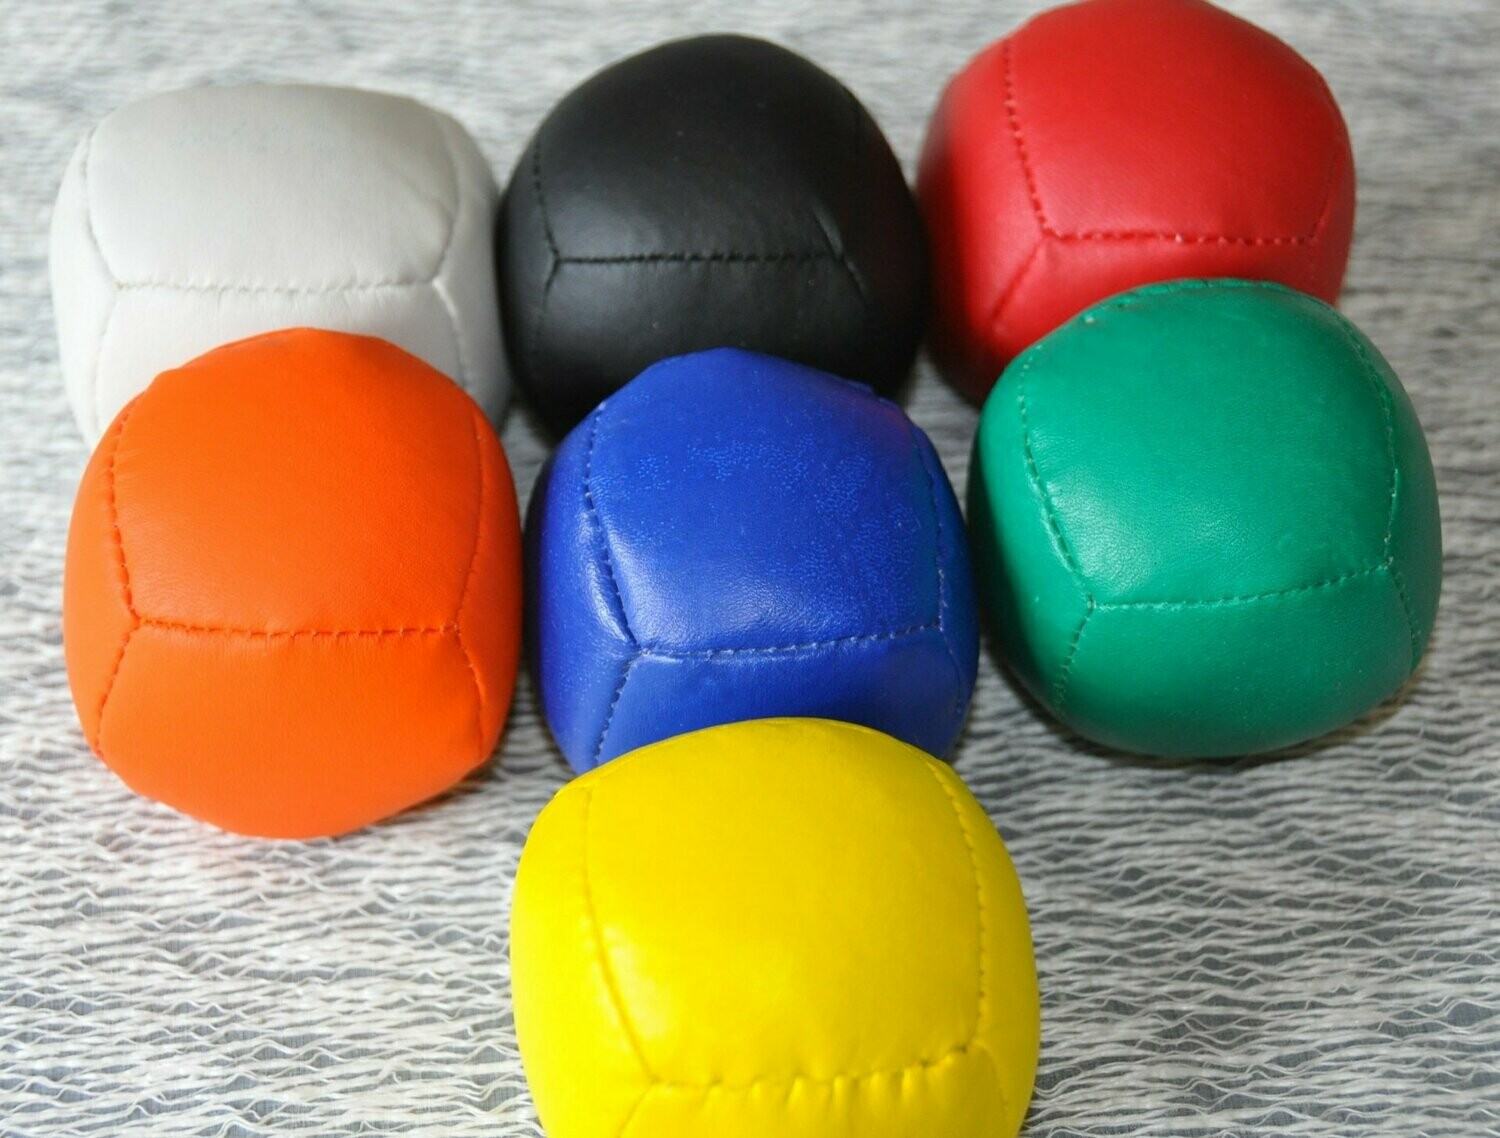 REHORULI®-Jonglierball - Größe M+ (51mm/90g) 6-Panel